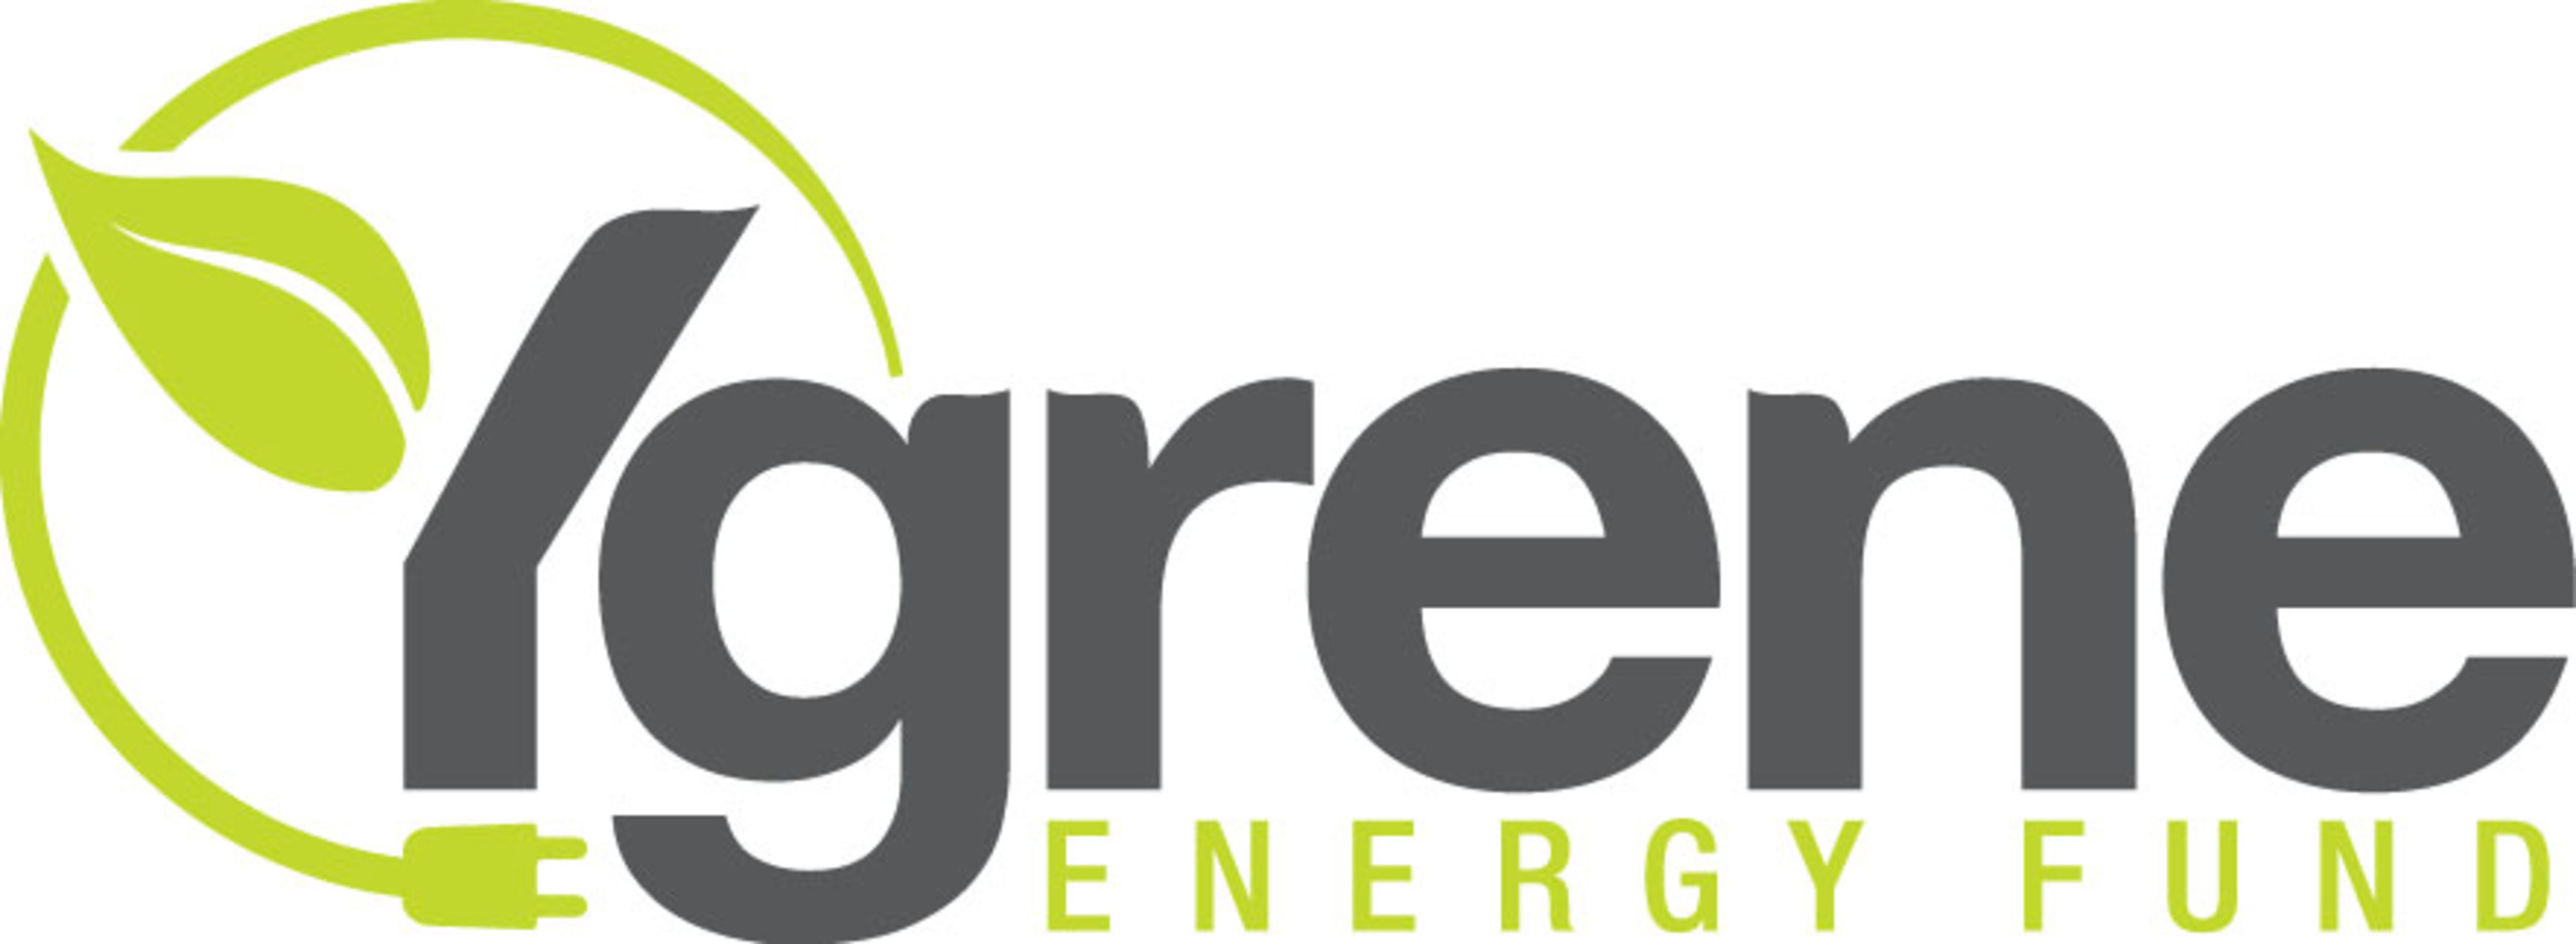 Ygrene Energy Fund Logo.